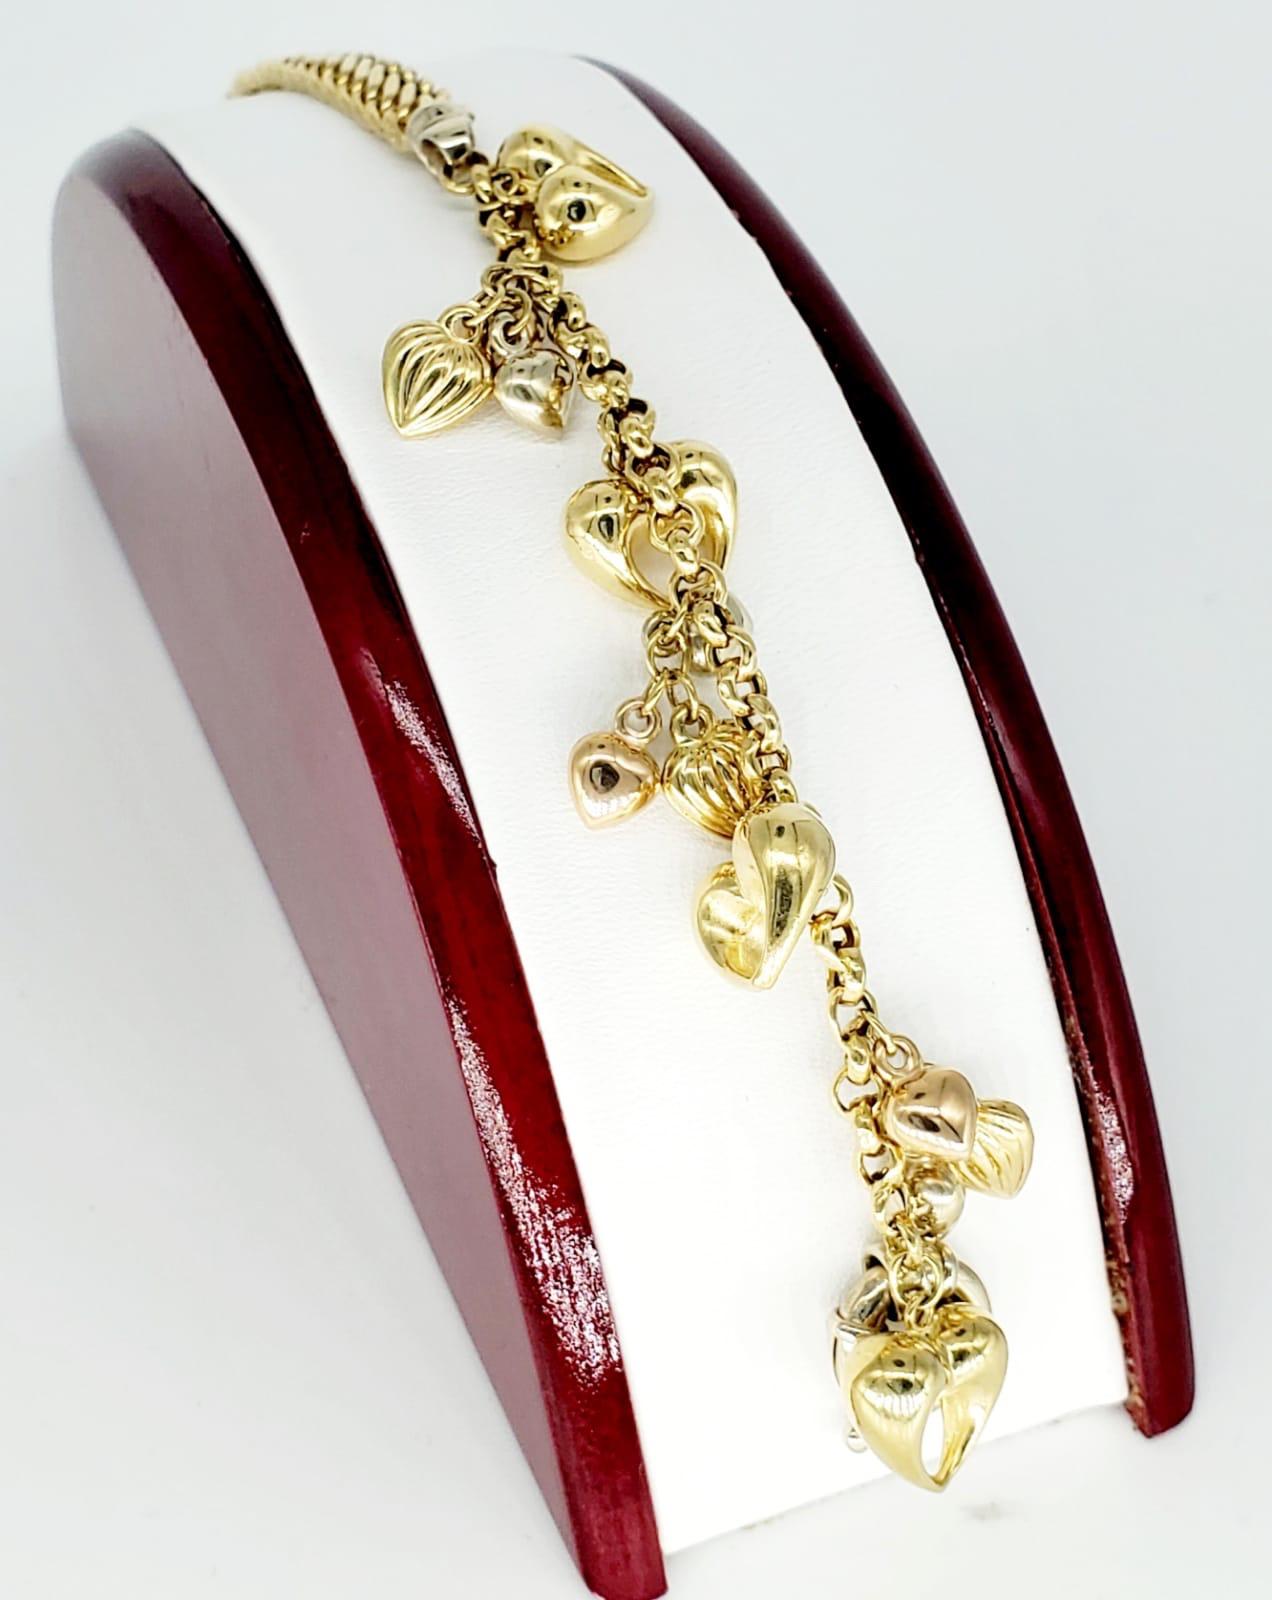 18 carat gold charm bracelet